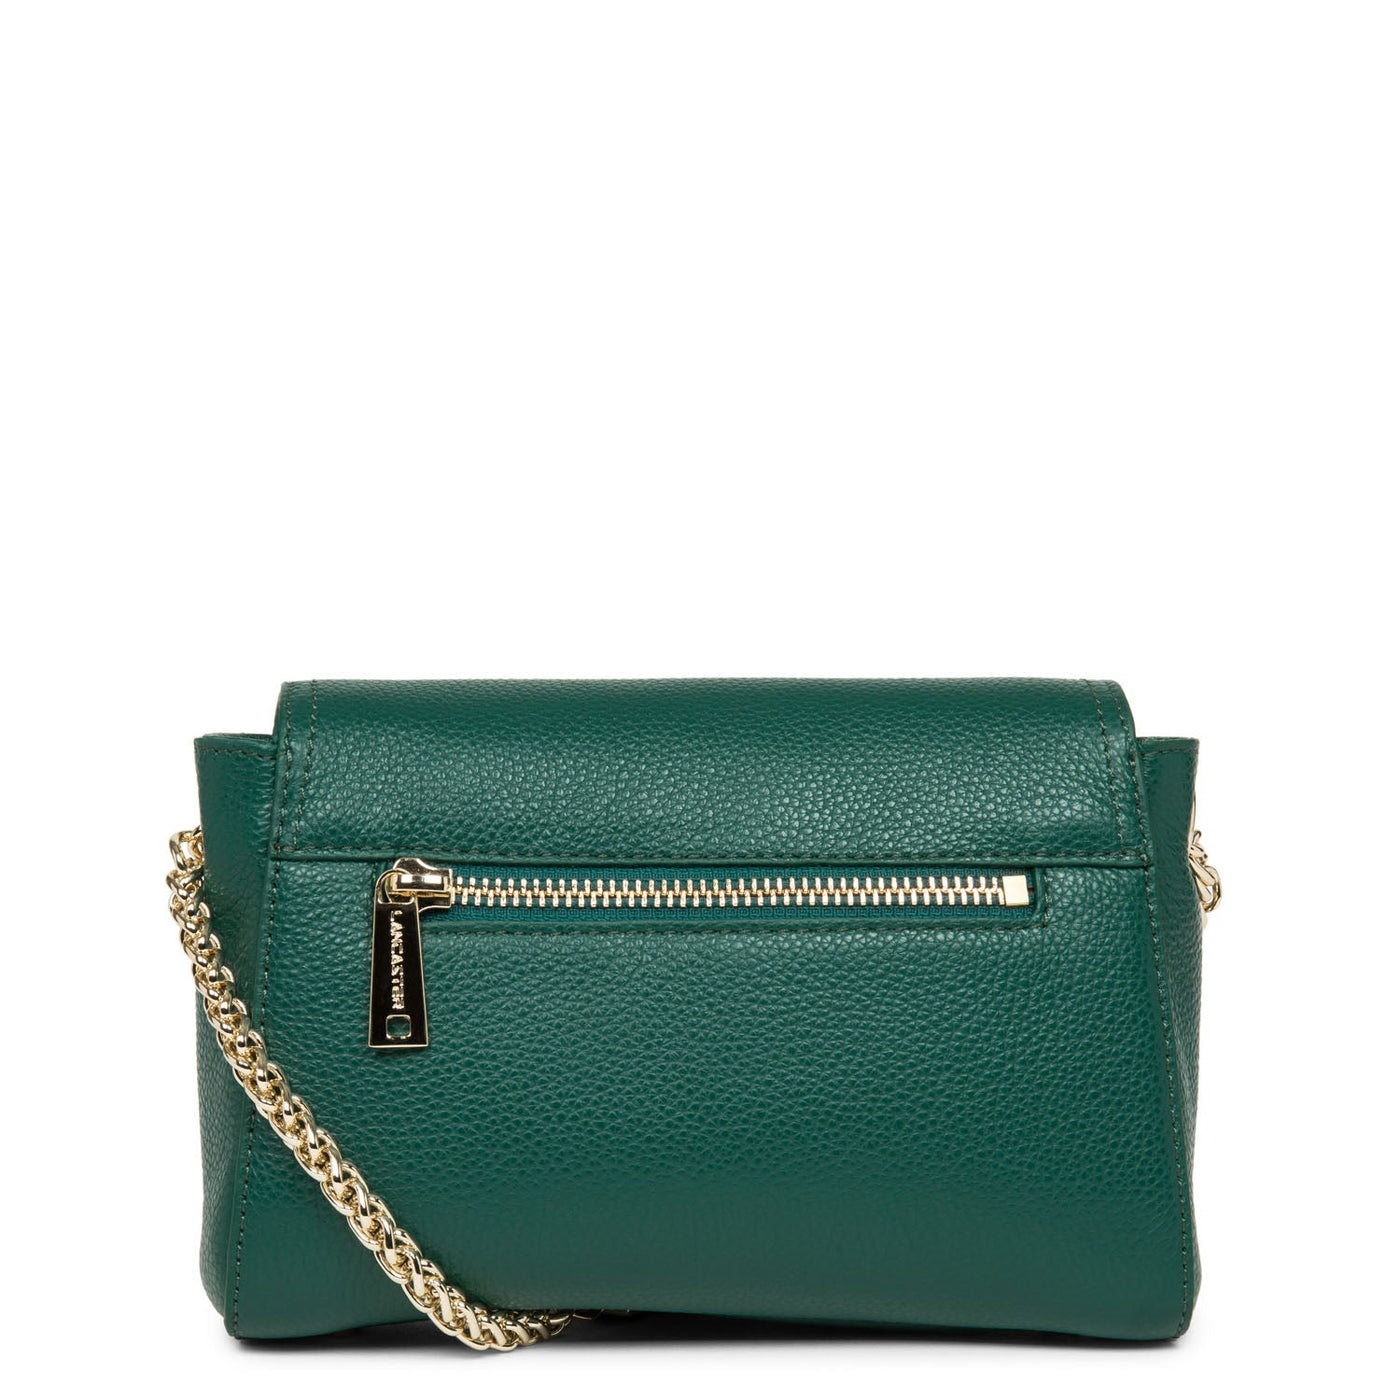 crossbody bag - foulonné milano #couleur_vert-paon